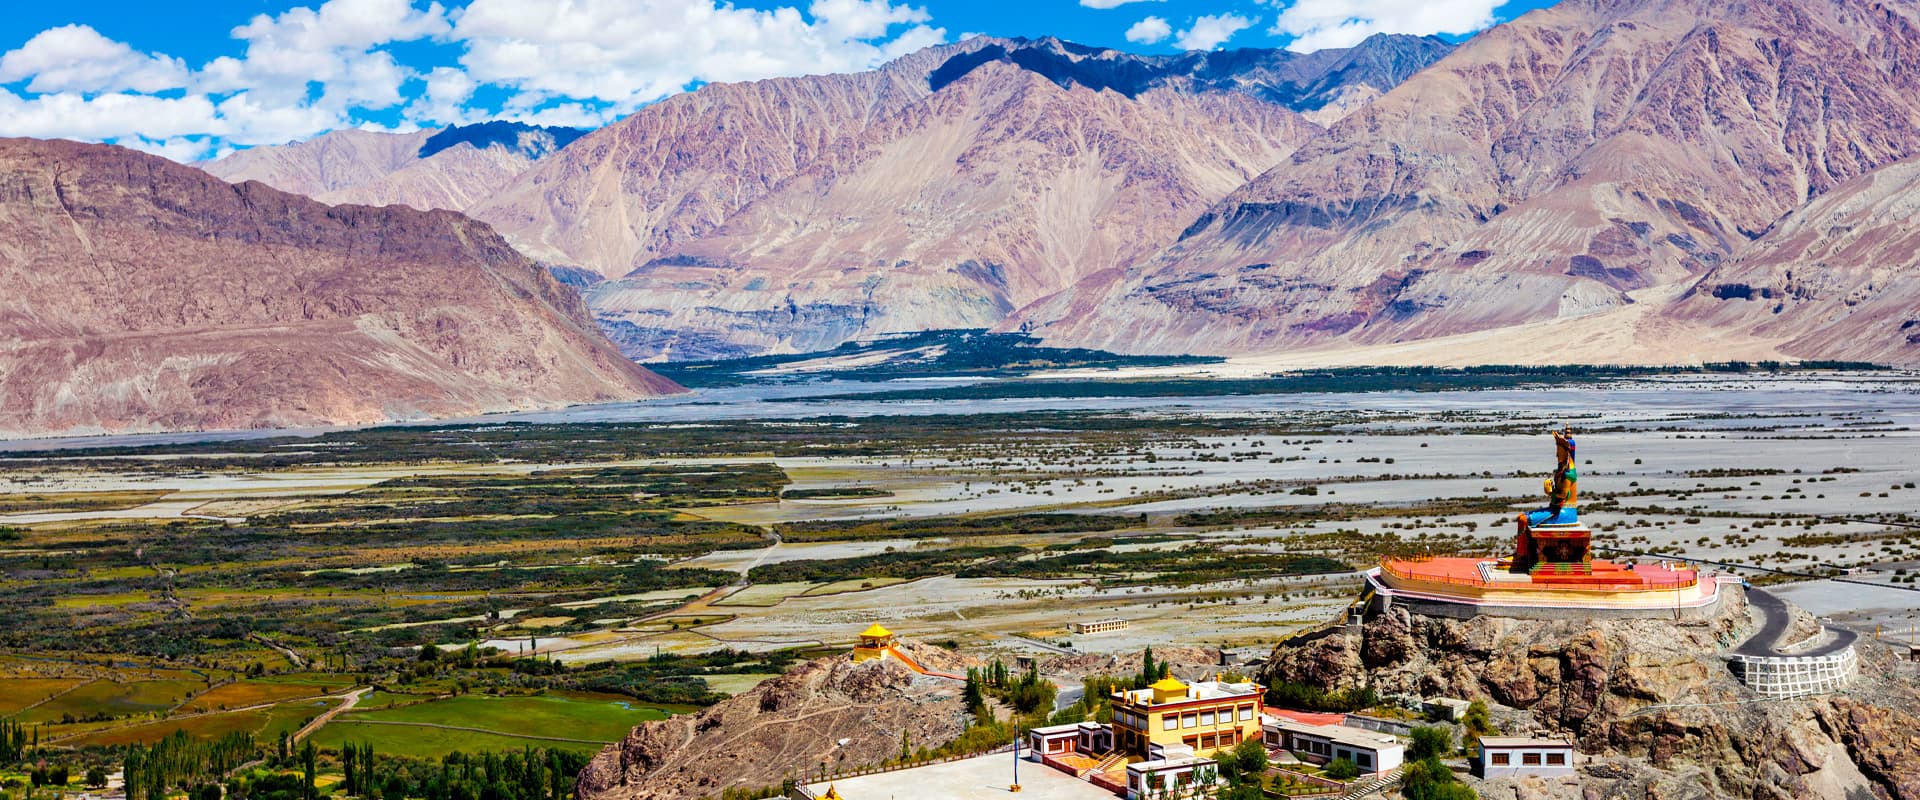 Nubra Valley, Ladakh, Jammu and Kashmir, Himalayas, India